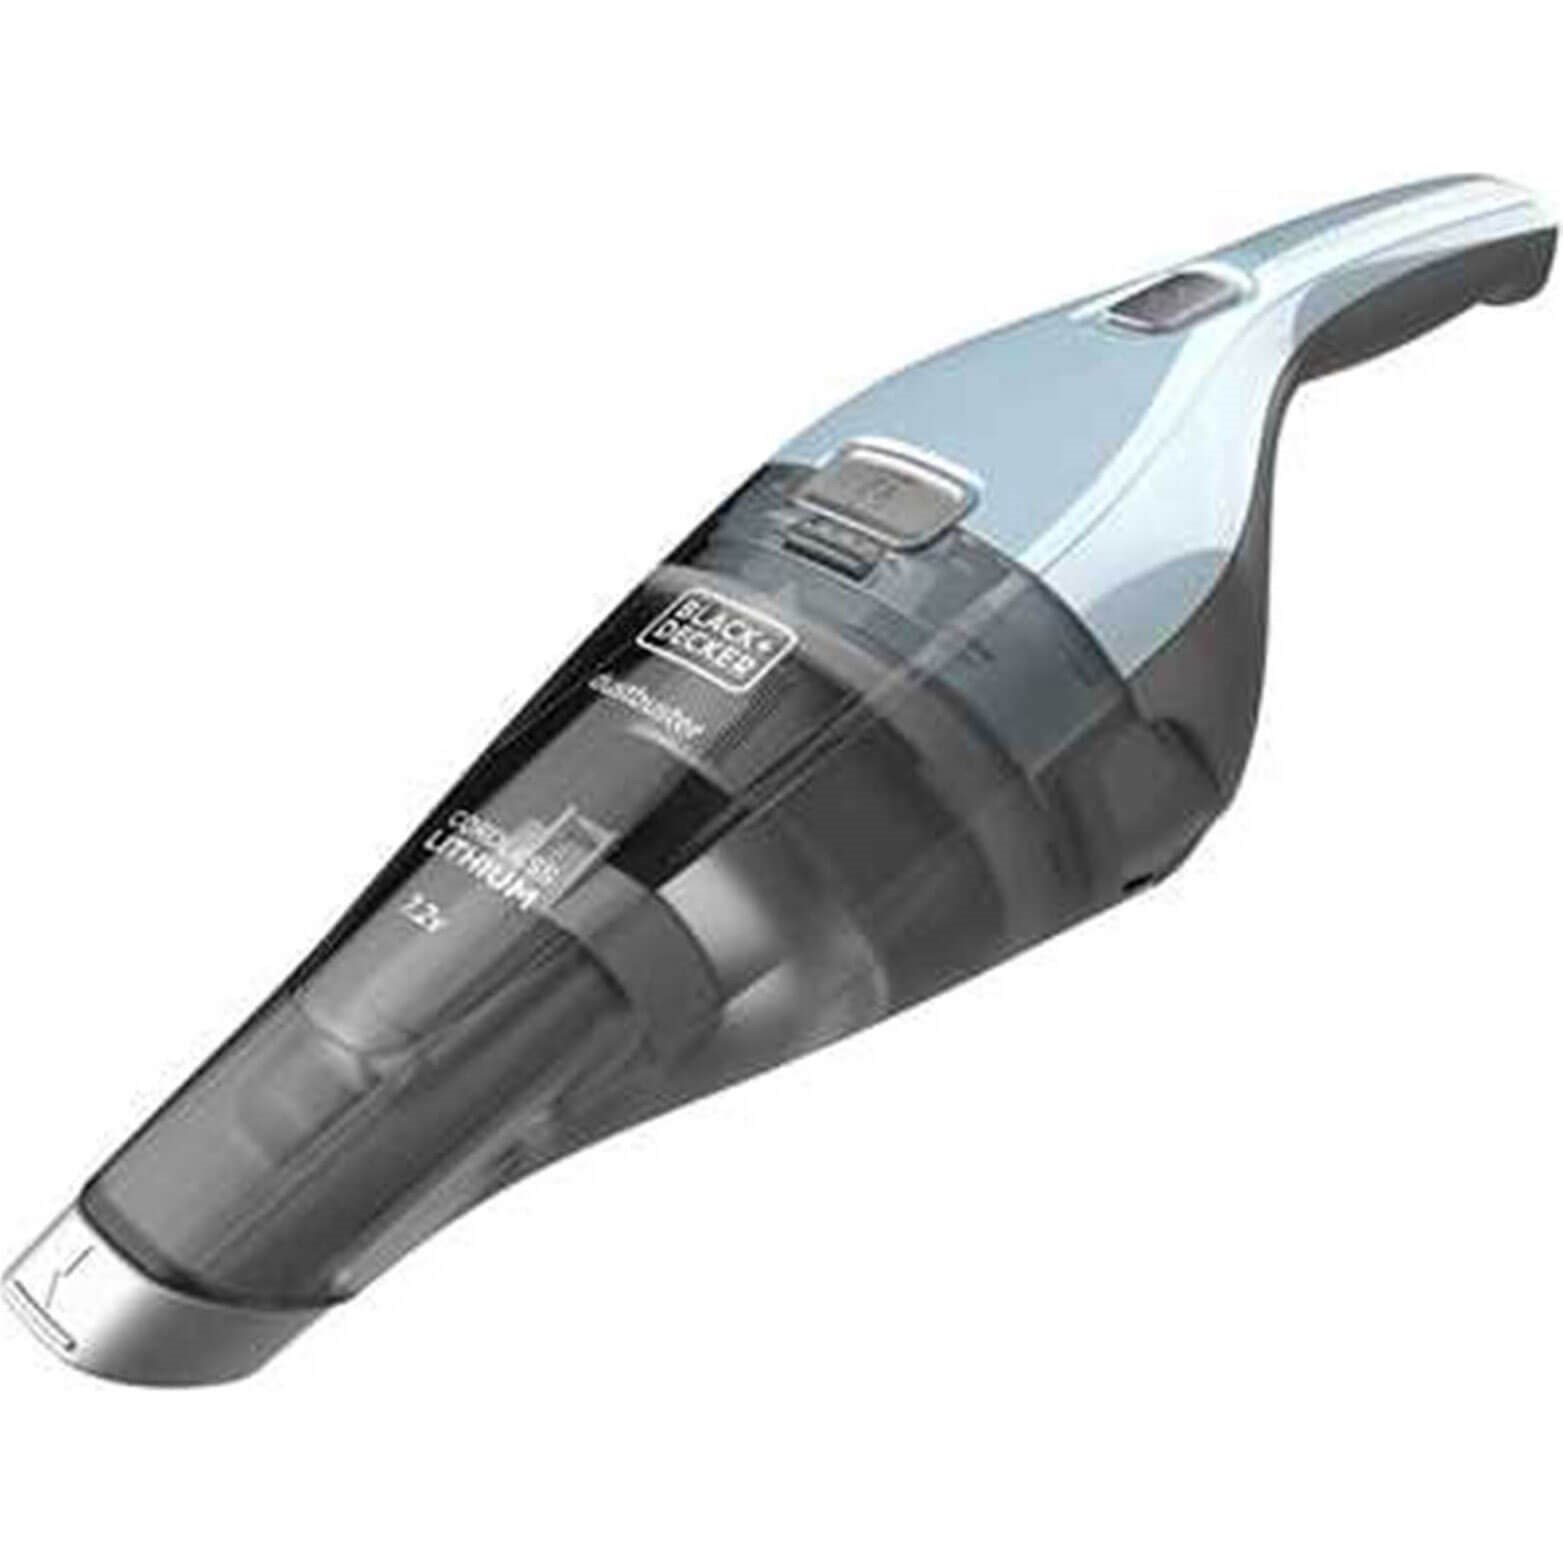 Black and Decker NVC215W 7.2v Cordless Dustbuster Hand Vacuum